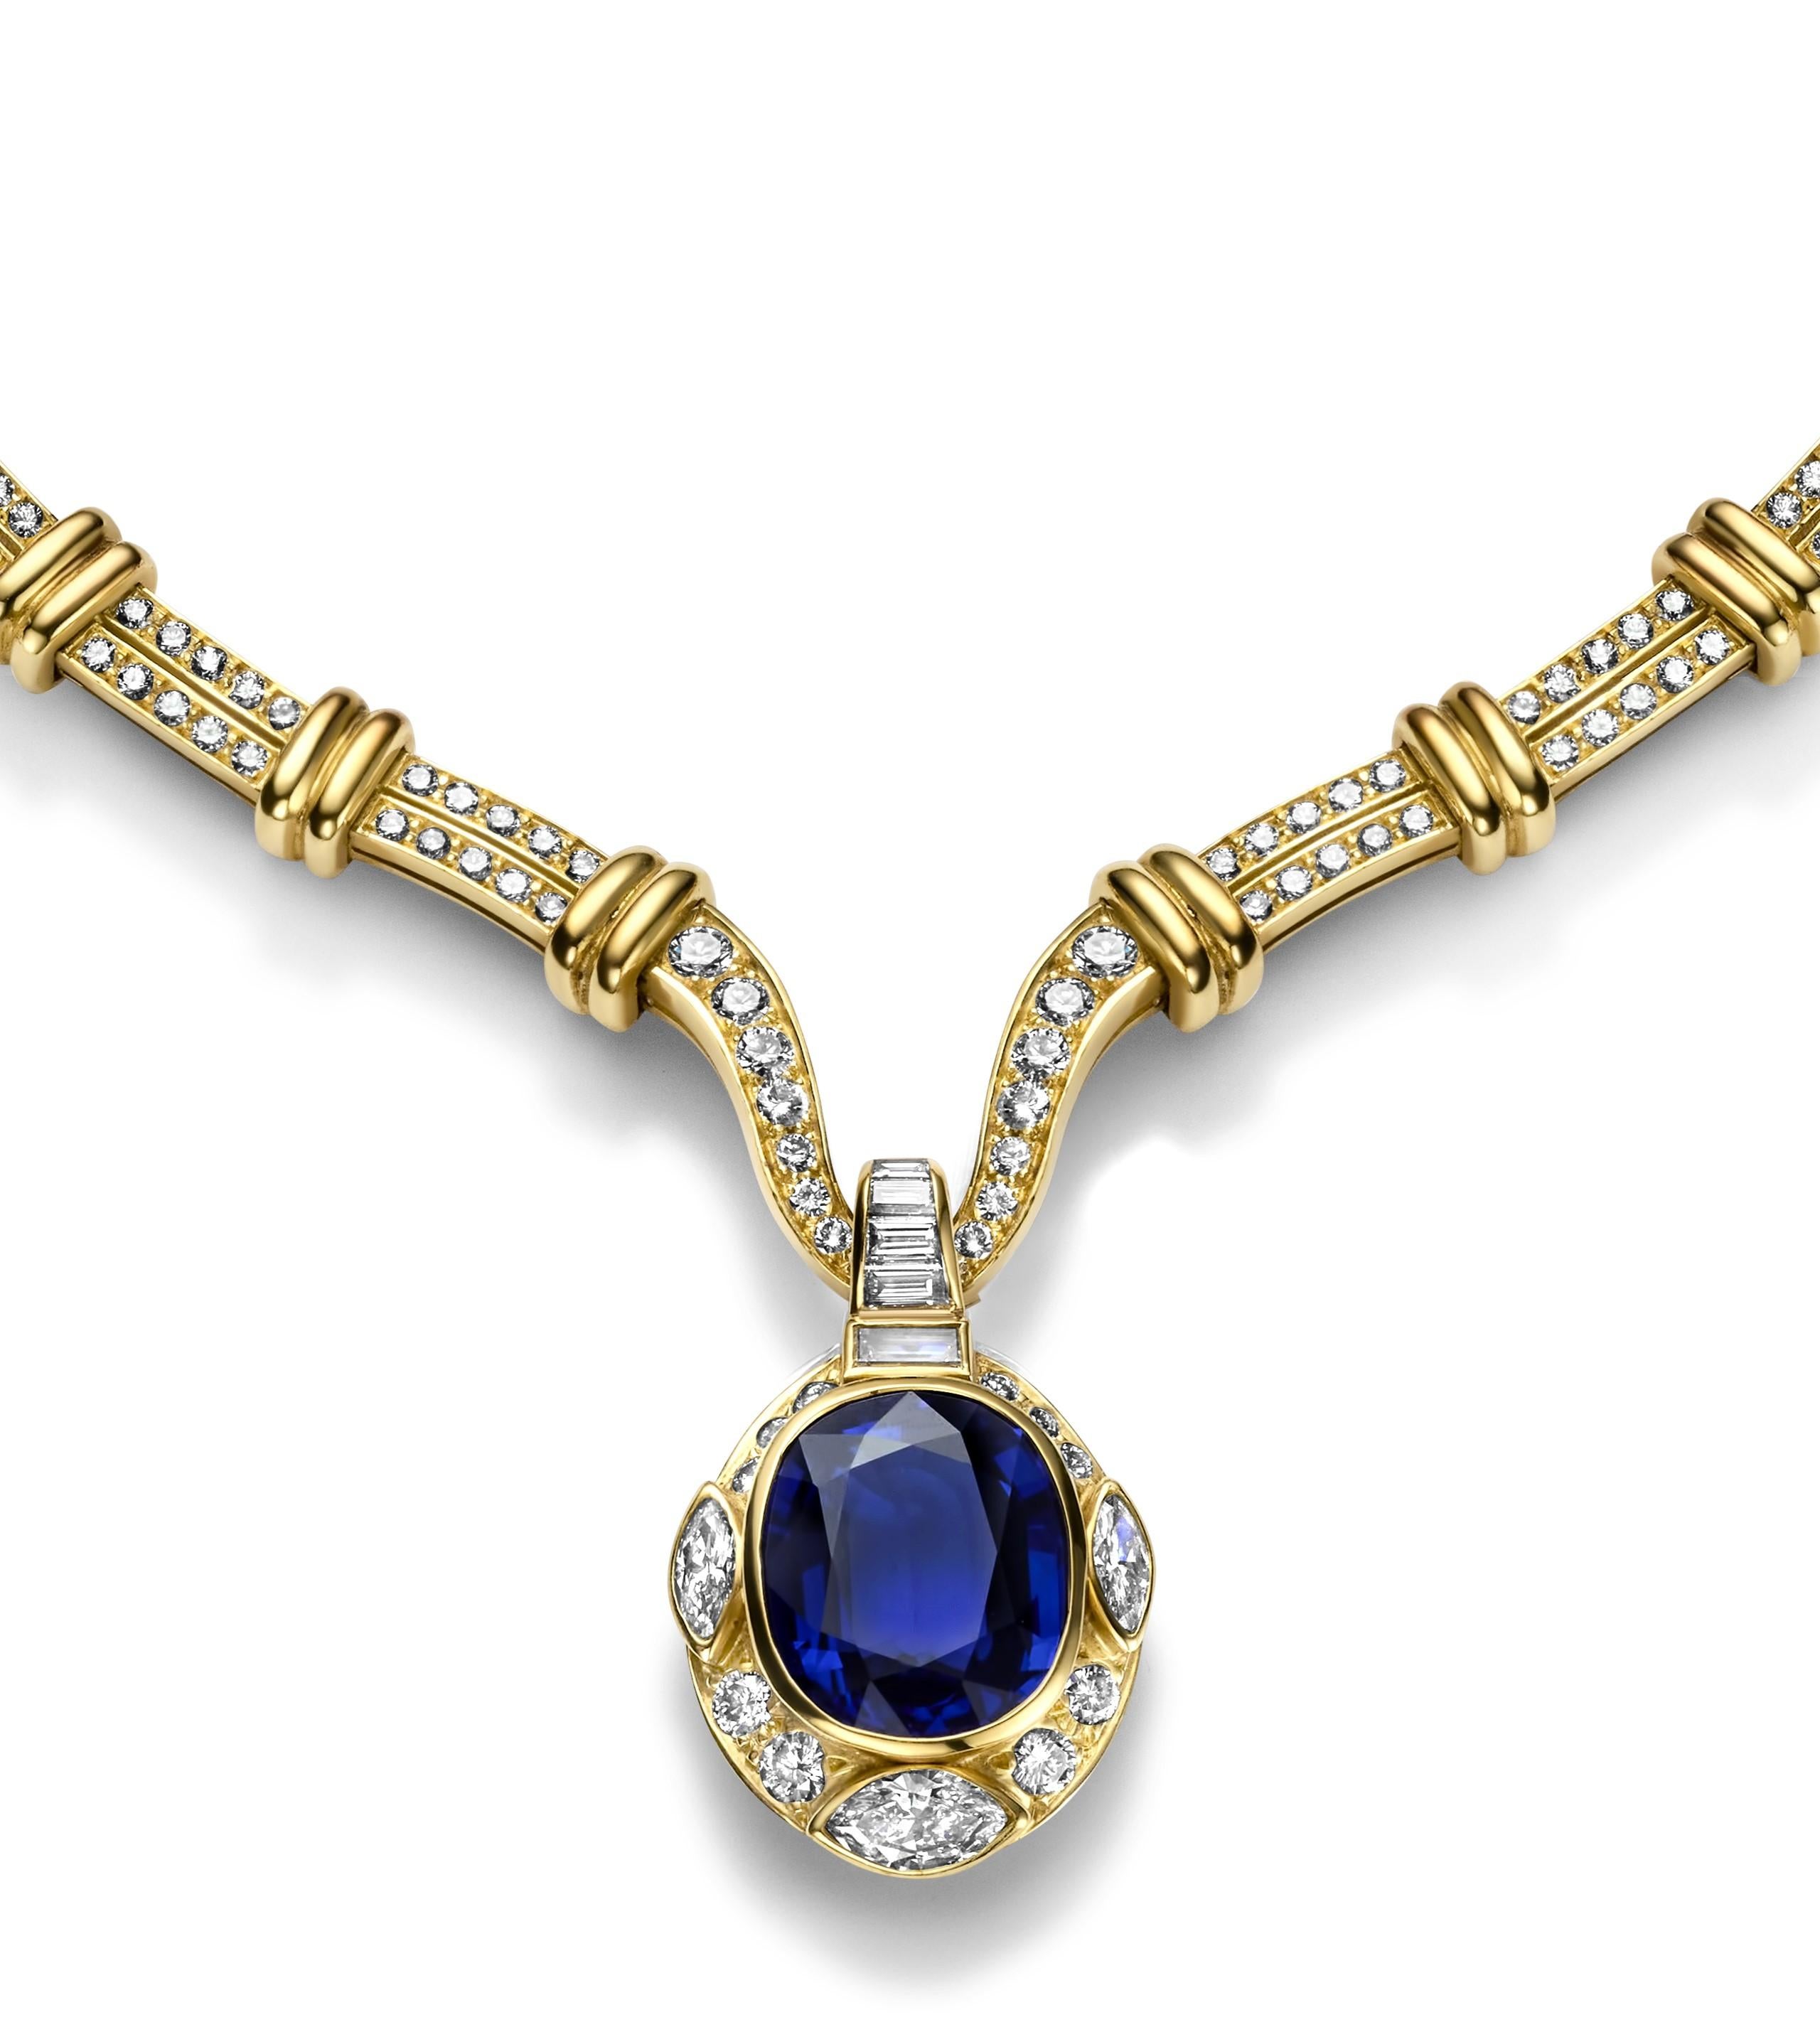 Adler Genèva Sapphire & Diamonds Necklace, Estate Sultan Oman Qaboos Bin Said, GRS Certified

Sapphire: Natural vivid blue, oval shape, brilliant cut Sri Lanka sapphire of 14.1 ct.
Comes with GRS certificate (Report number GRS2022-117458)

Diamonds: